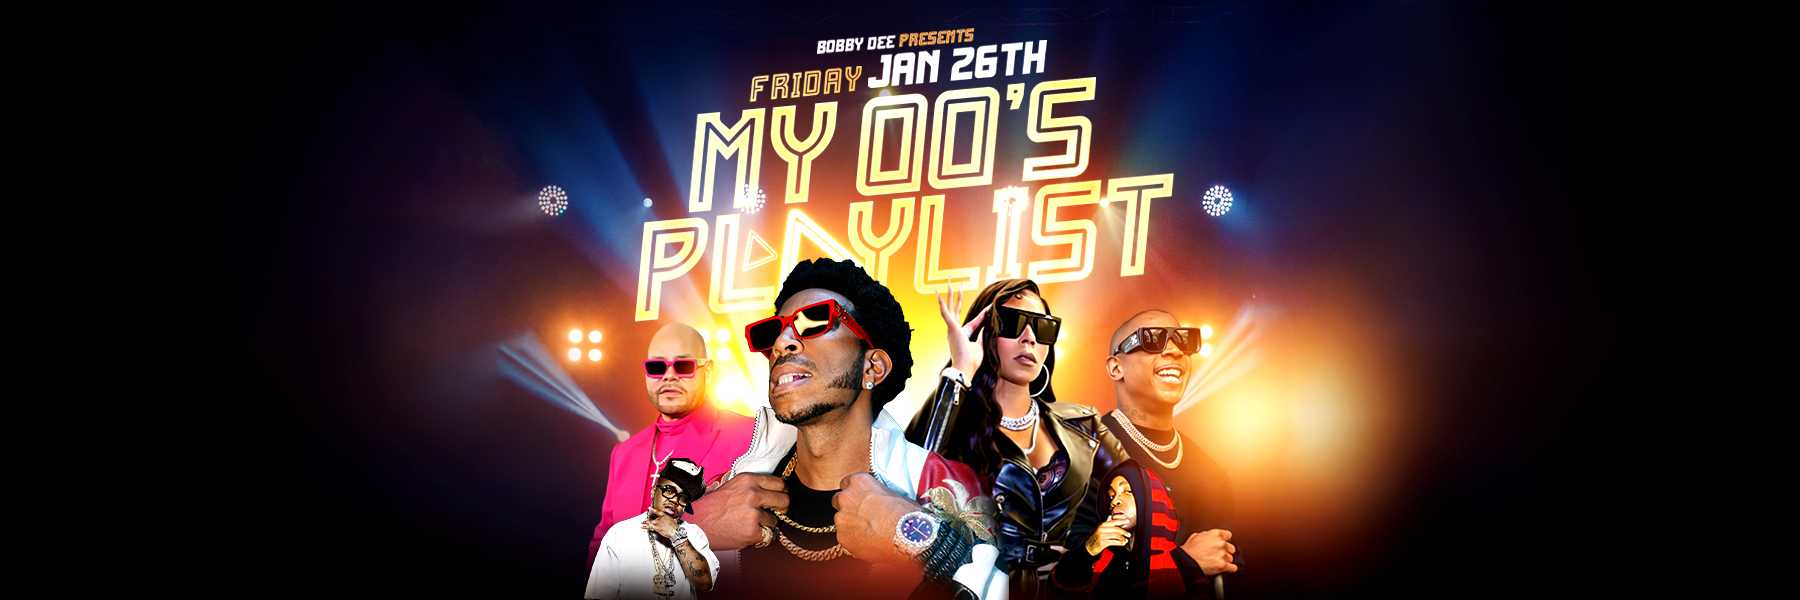 My 00's Playlist Tour Featuring Ludacris, Ja Rule, Ashanti, Fat Joe 